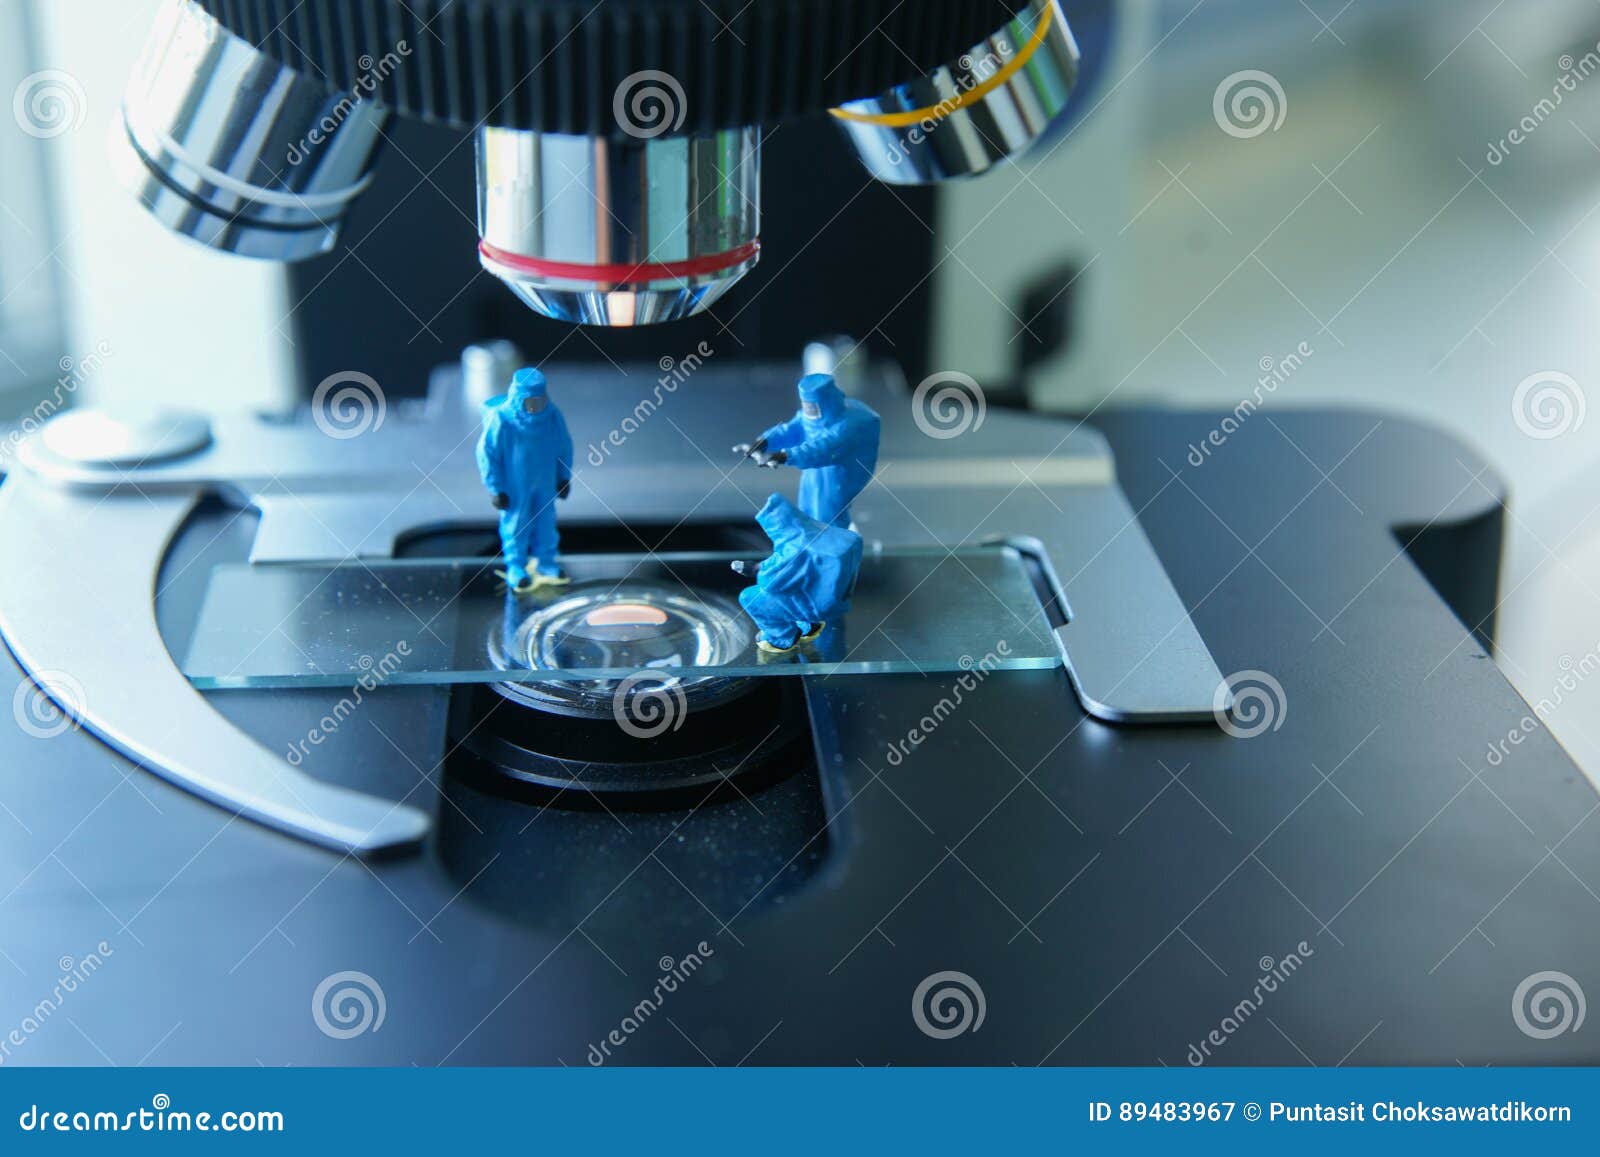 miniature people scientist at work